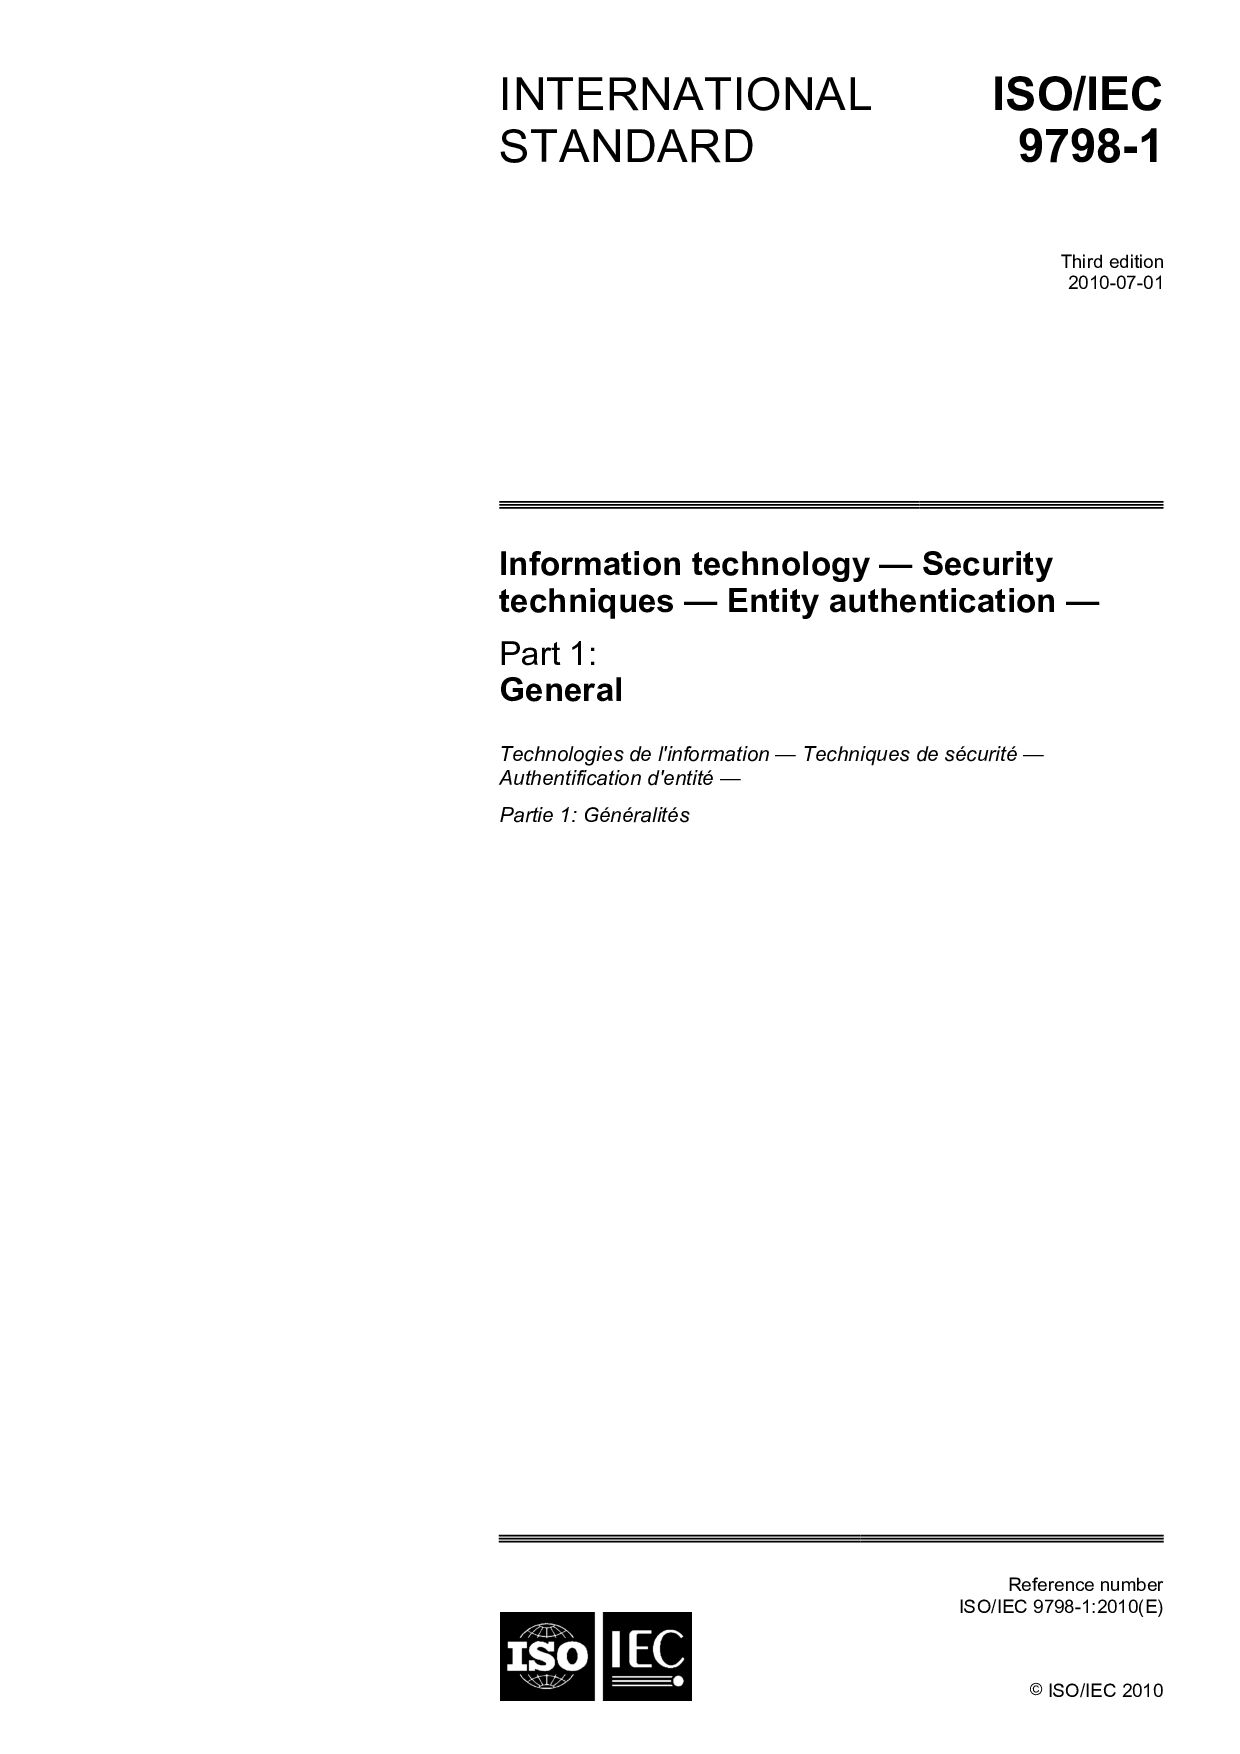 ISO/IEC 9798-1:2010